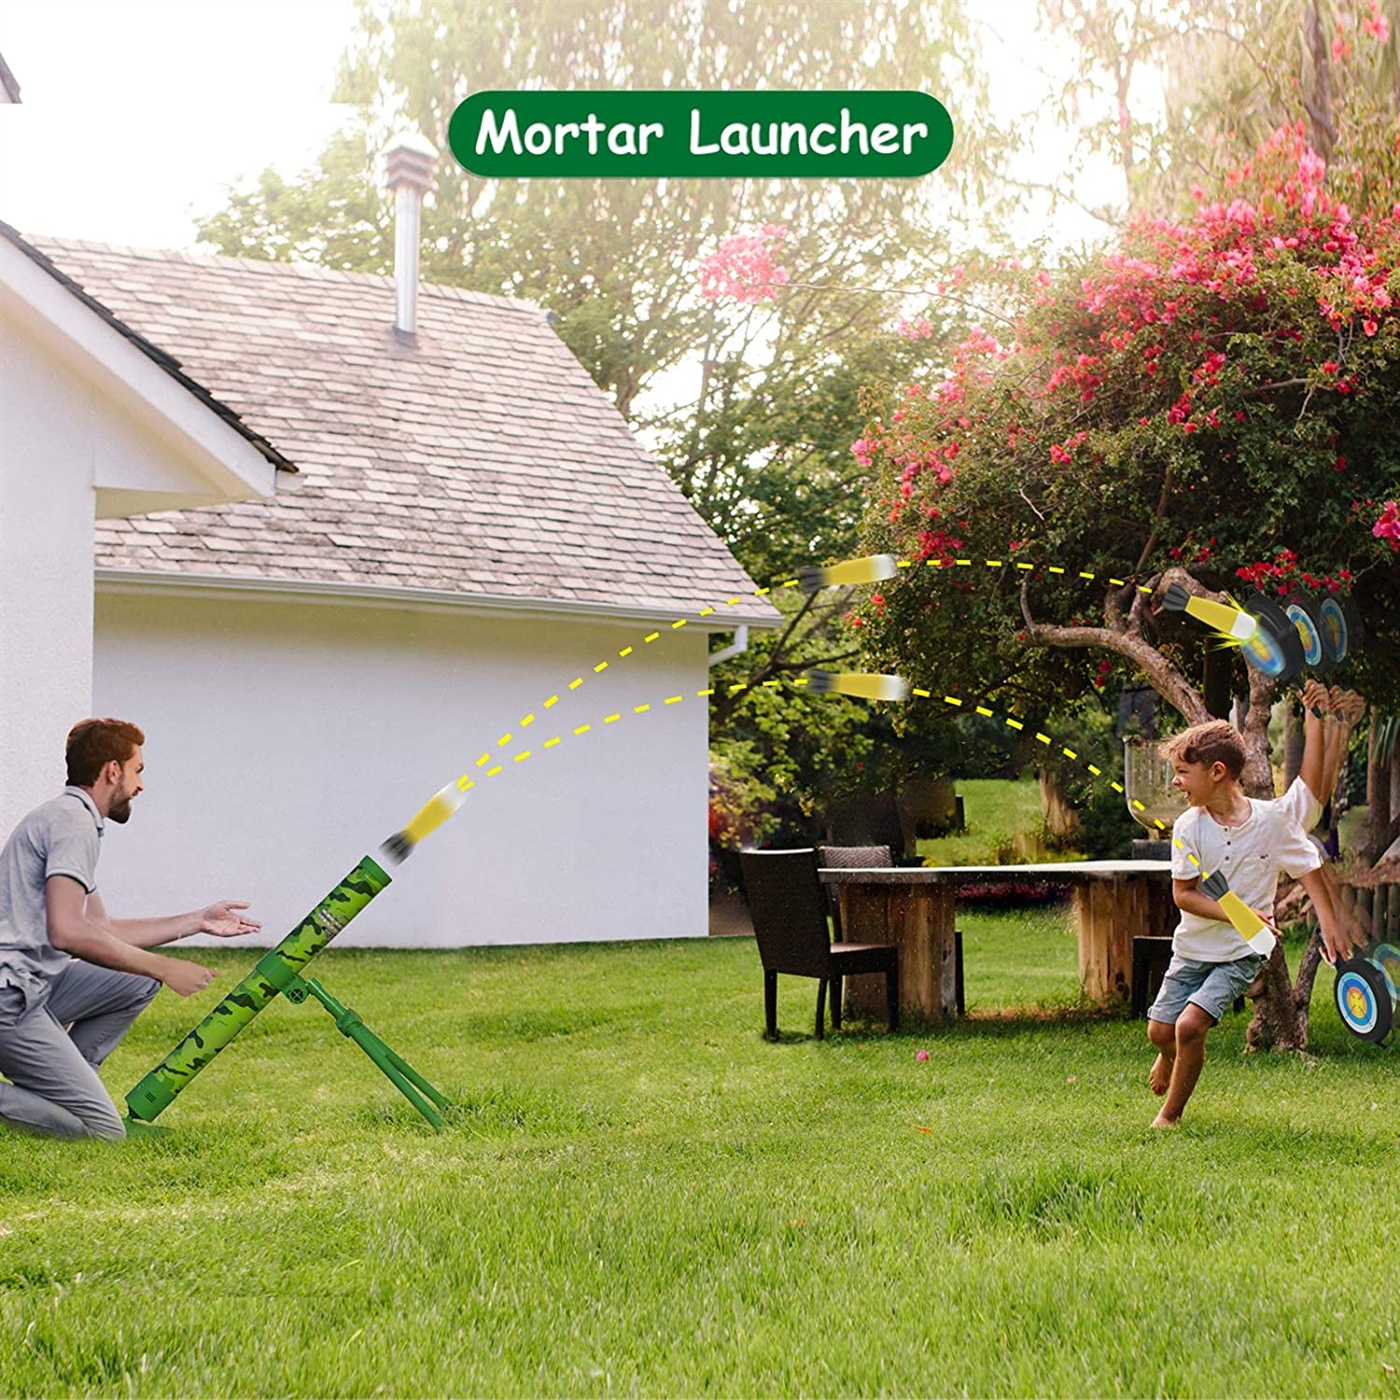 Mortar launcher is suitable for parent-child activities.